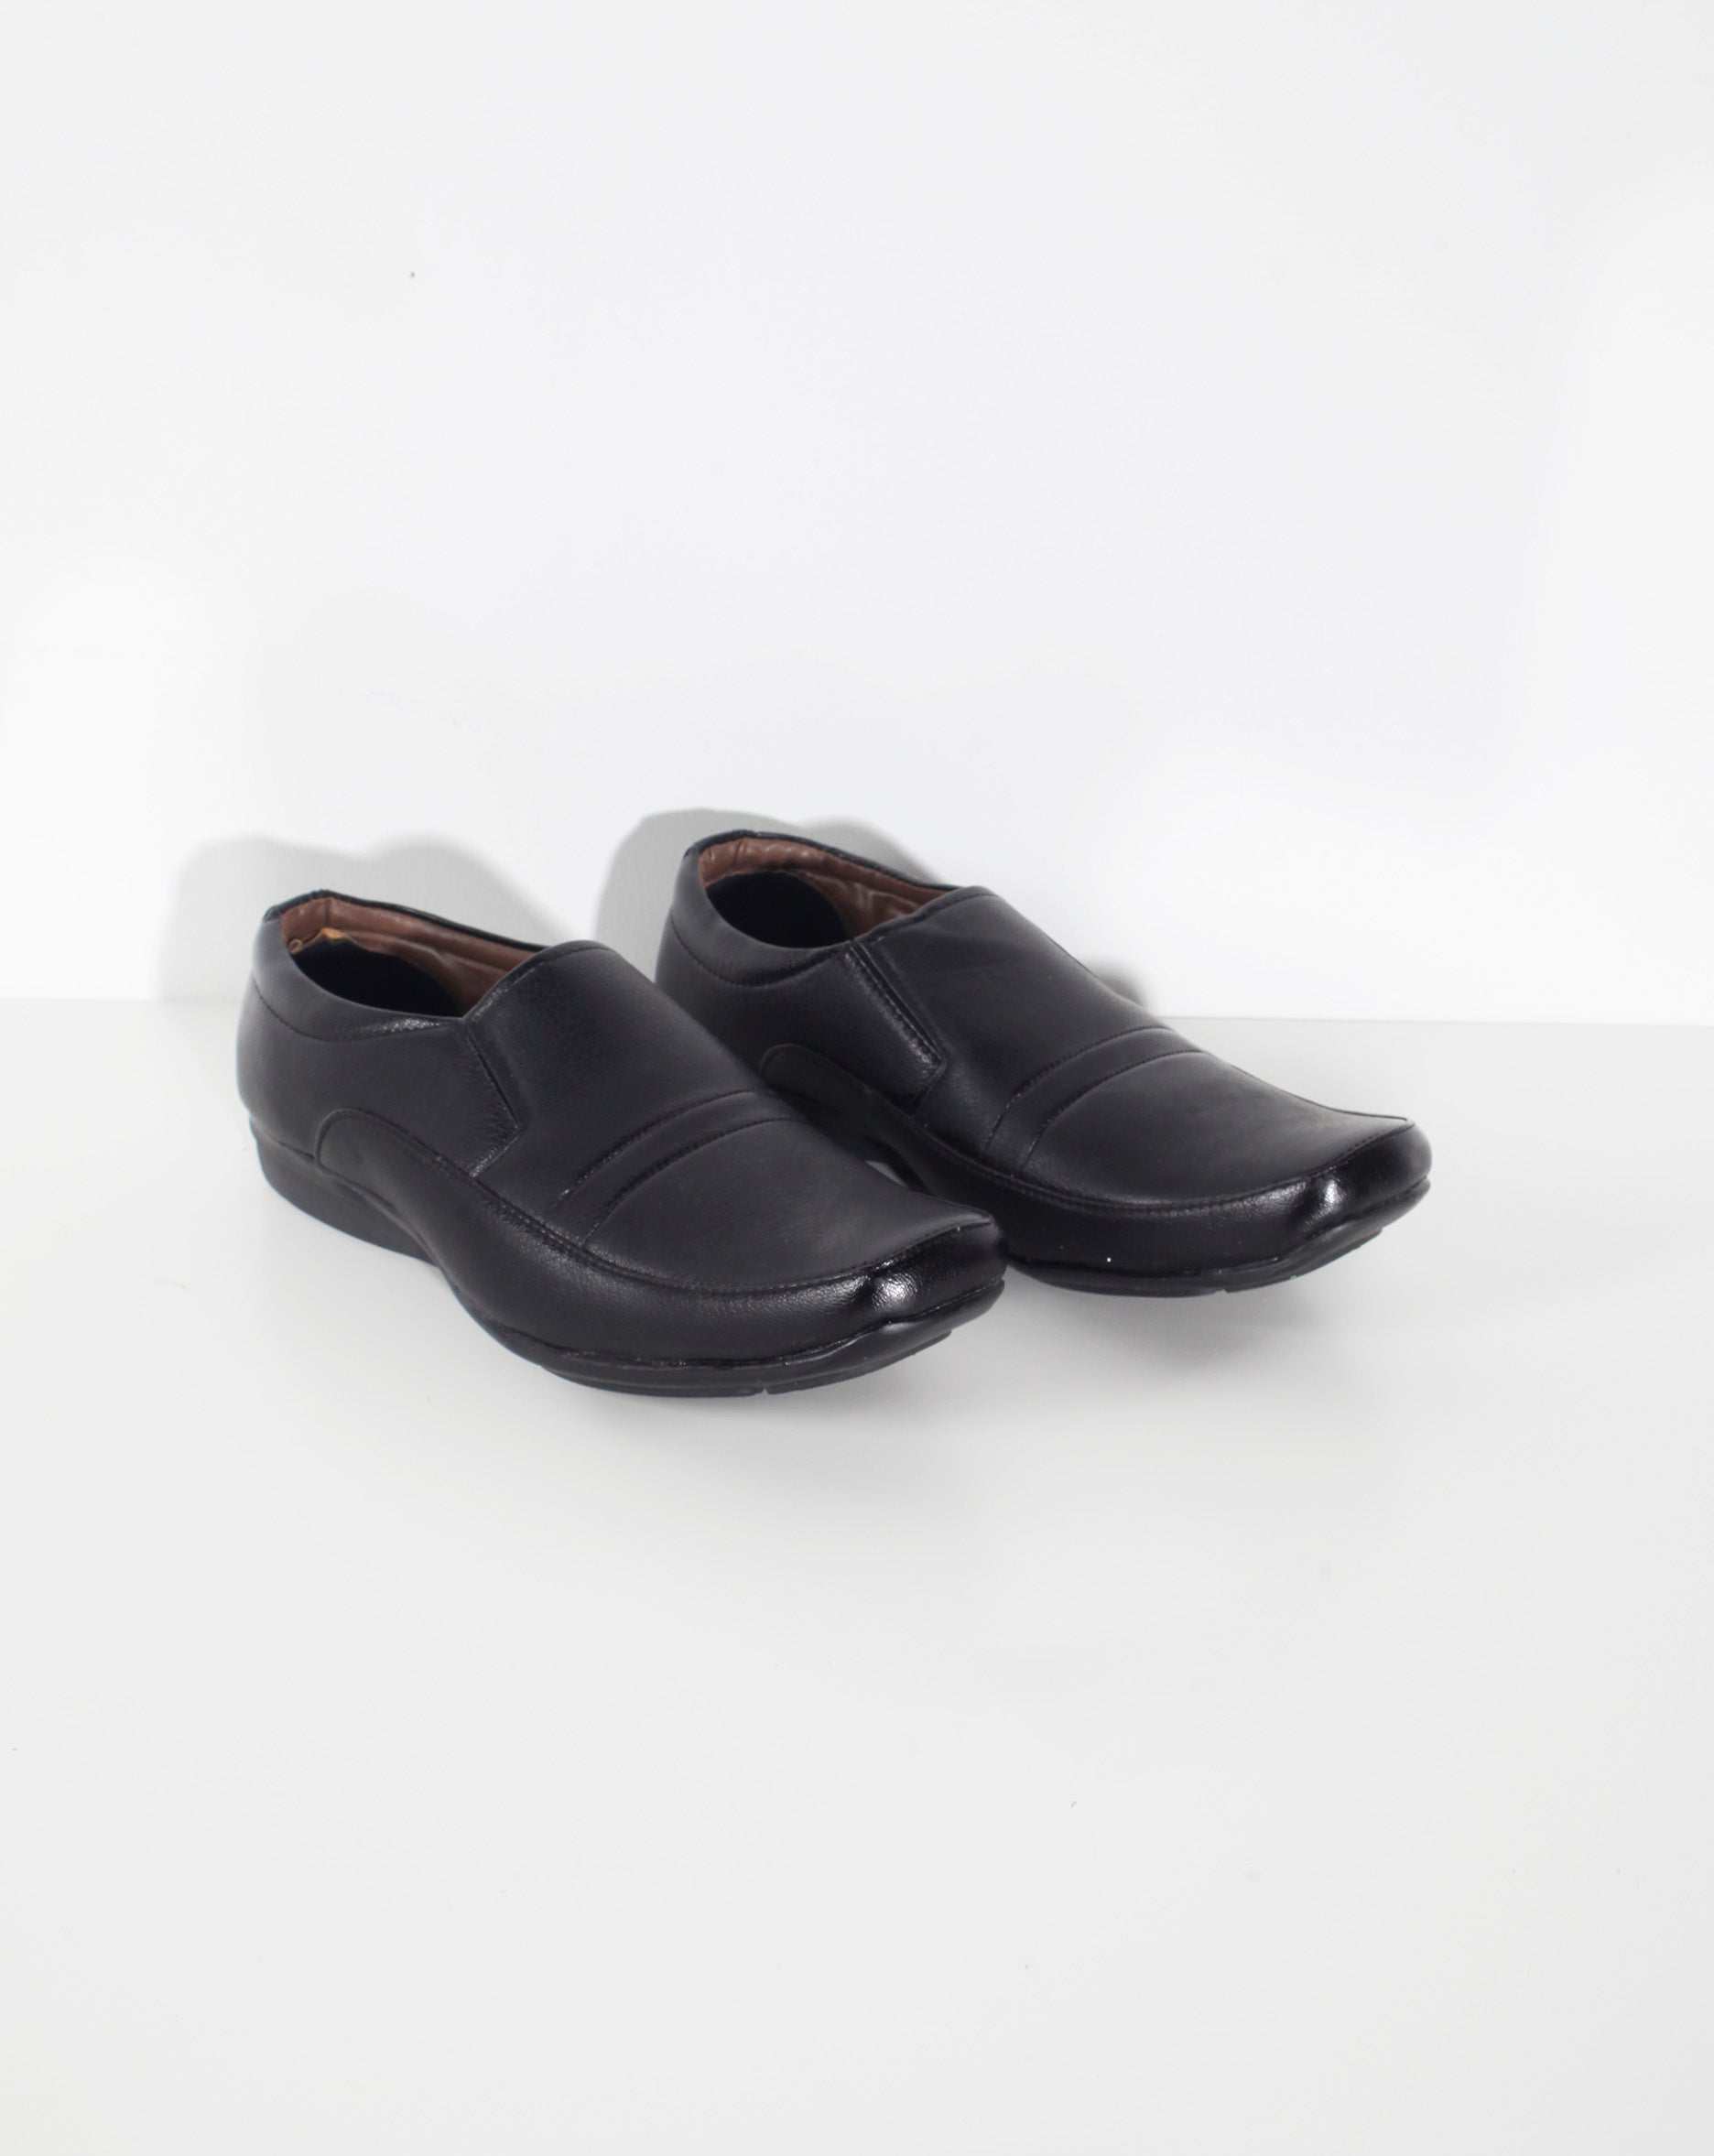 Mens Black Leather Slip-on Shoes (Eu42)